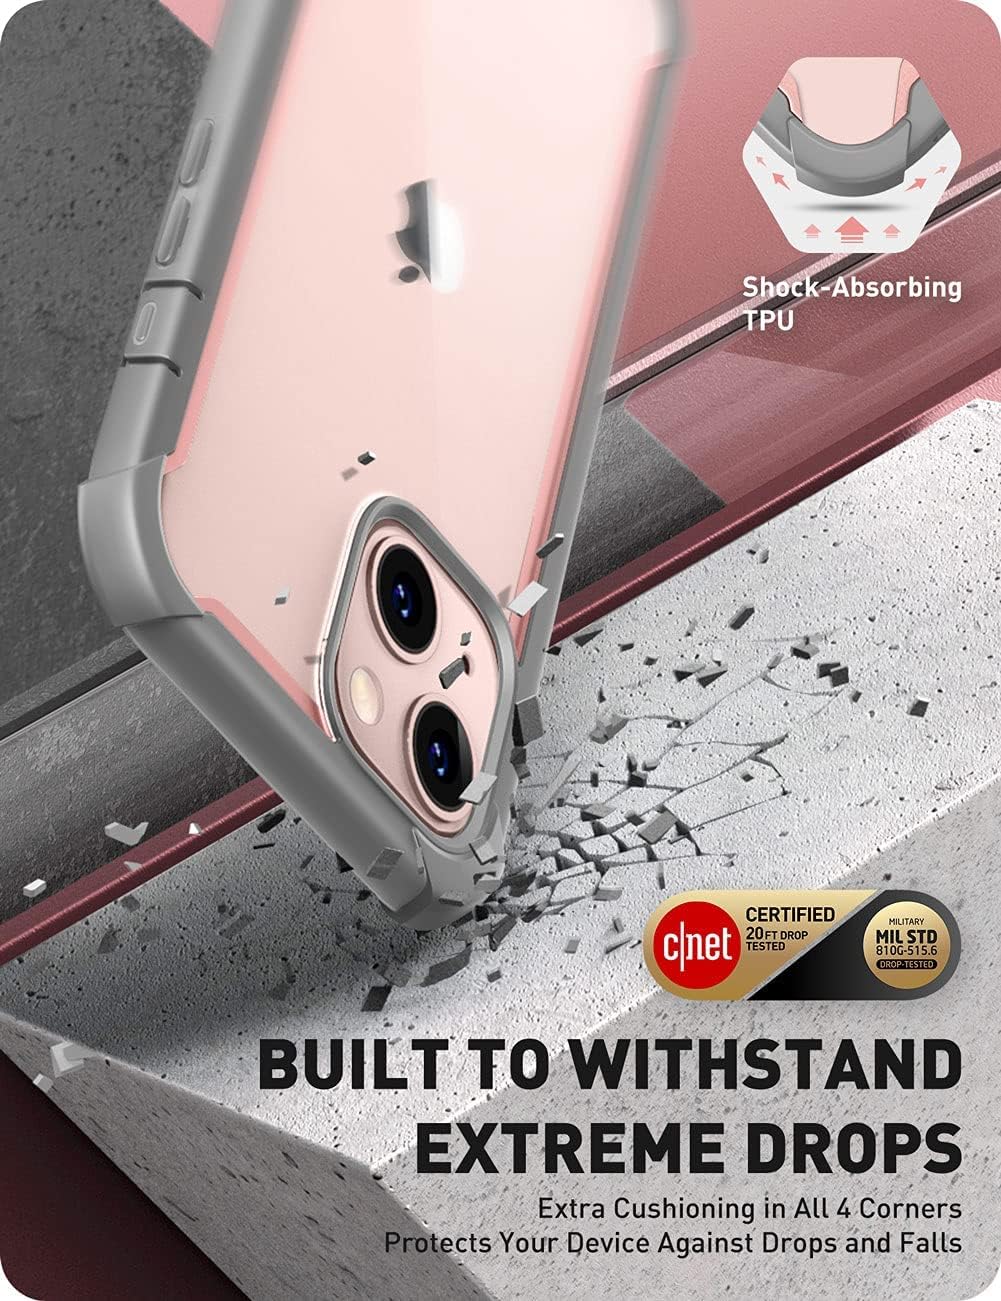 iPhone13 ケース 6.1 インチ 2021 液晶保護フィルム付き 米国軍事規格取得 360°保護 耐衝撃 防塵 衝撃吸収 耐久性 密着 ケーブル充電可能 背面クリア Aresシリーズ